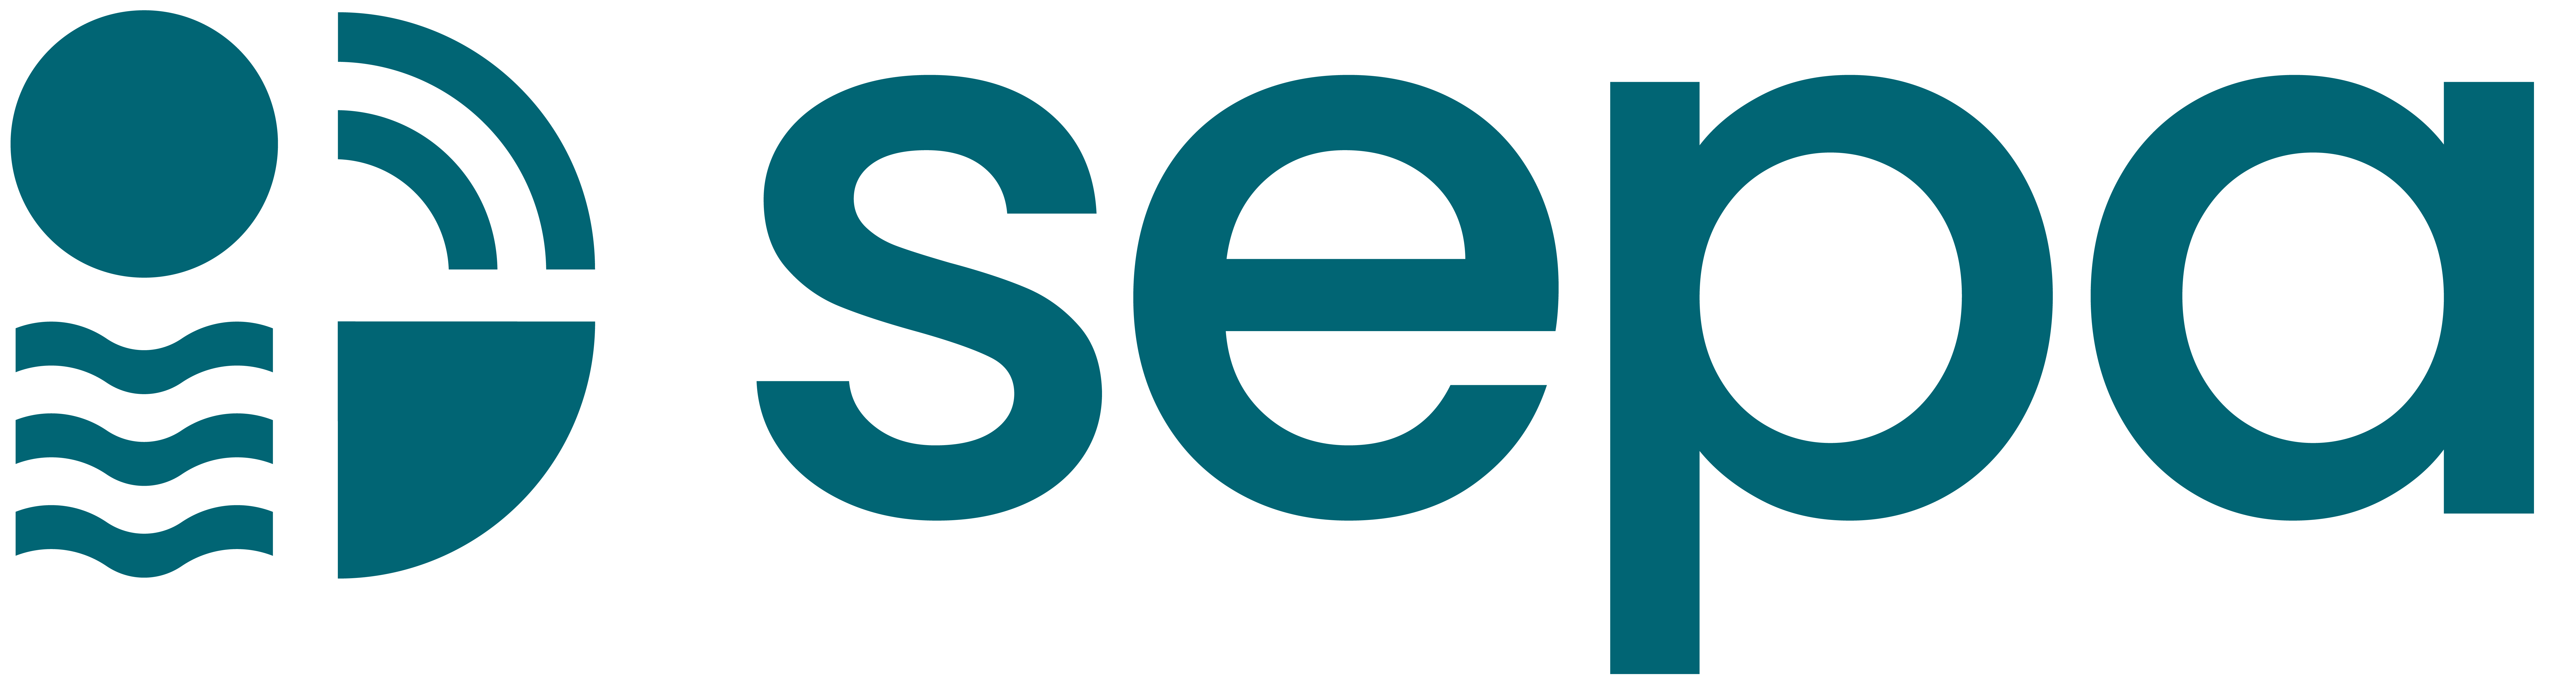 Scottish Environmental Protection Agency (SEPA) logo